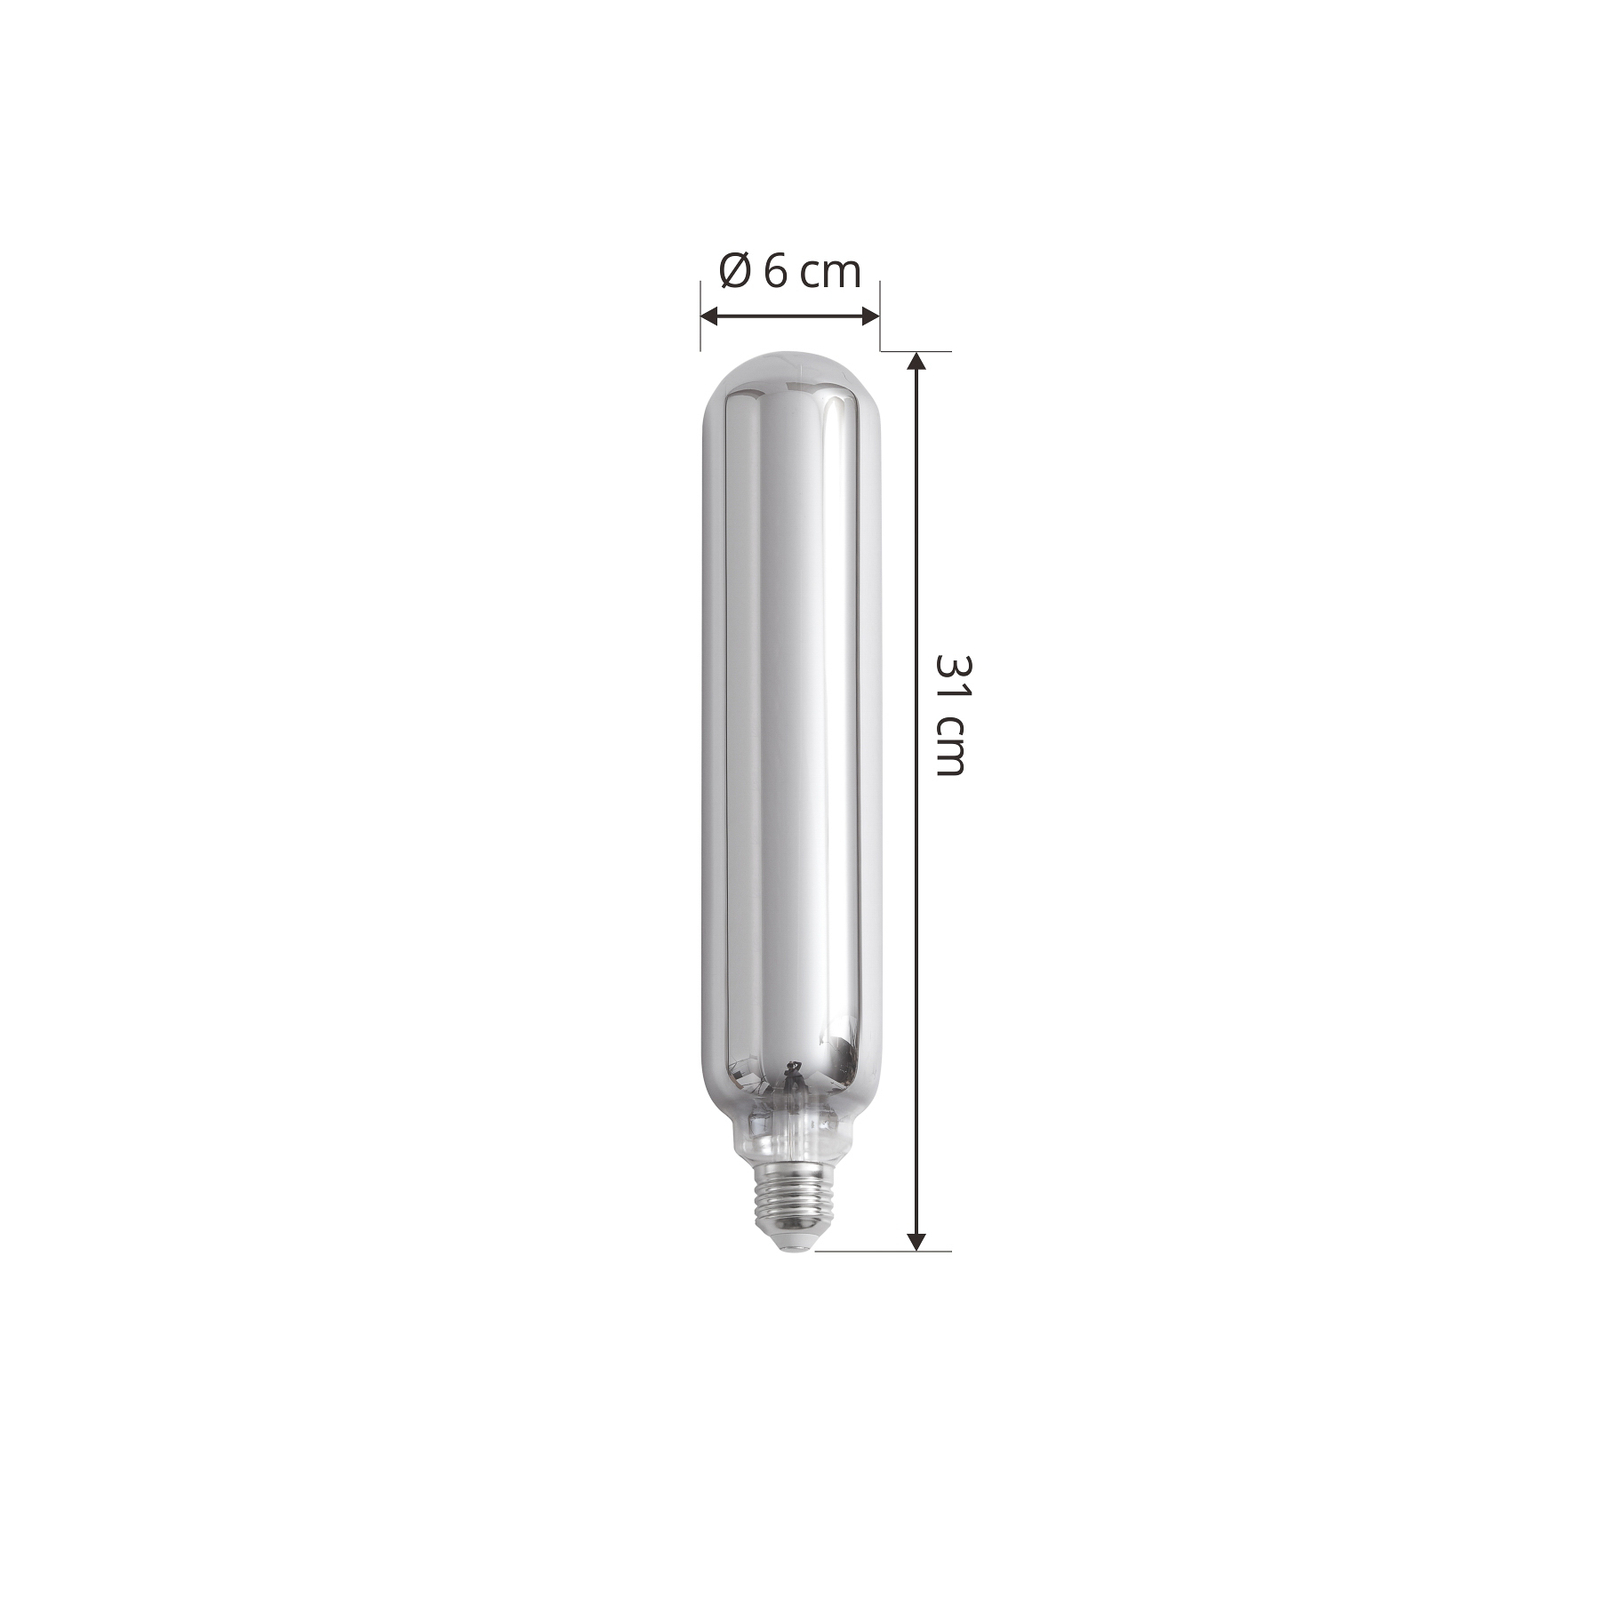 Lucande LED lamp E27 Ø 6cm 4W 1800K titanium